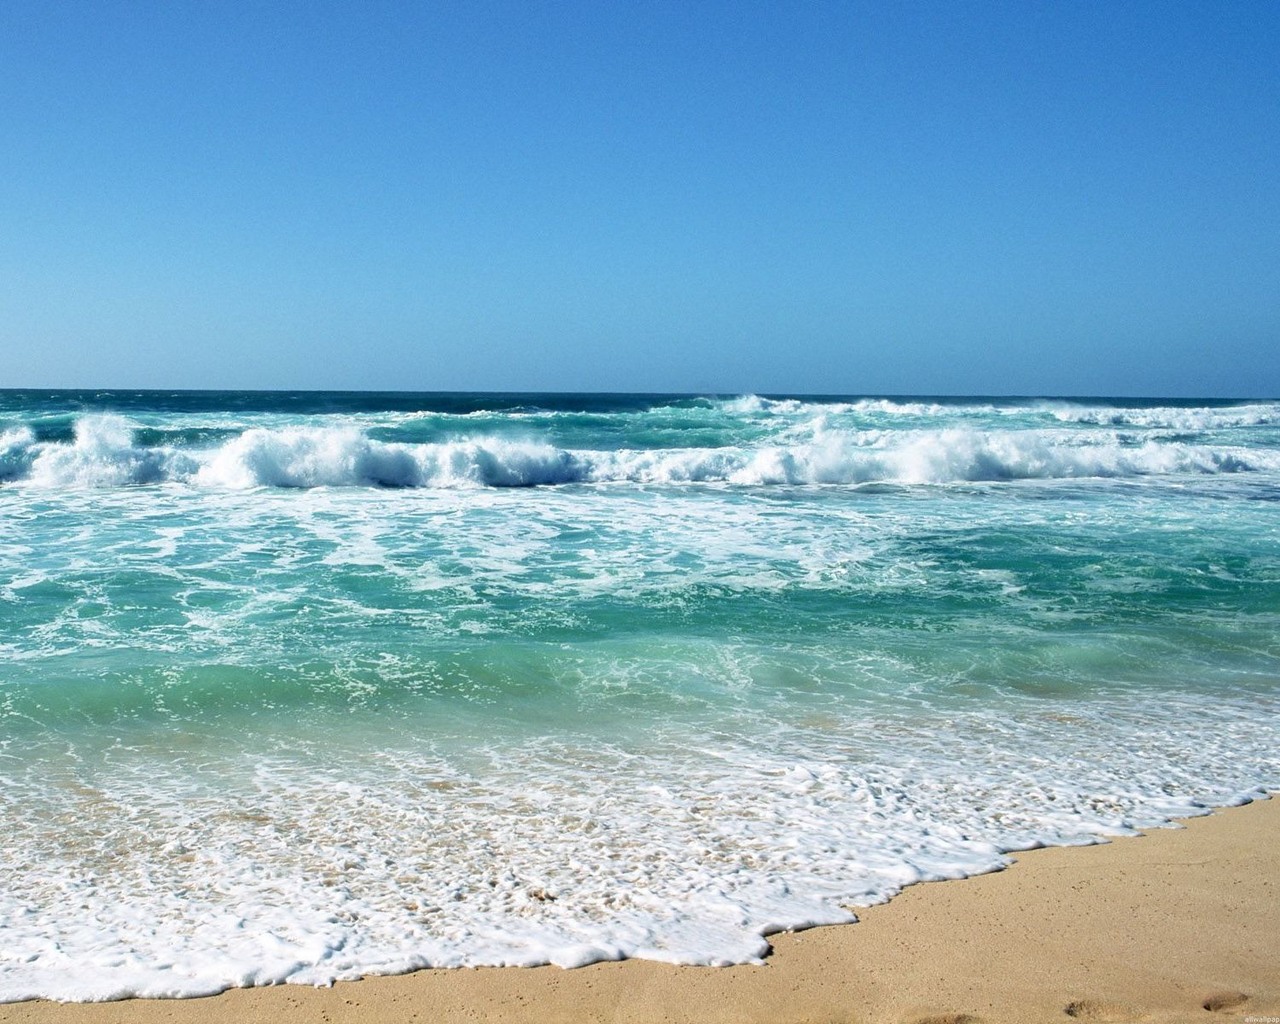 волны, текстура волн, прибой, вода, фон, waves texture background, фото